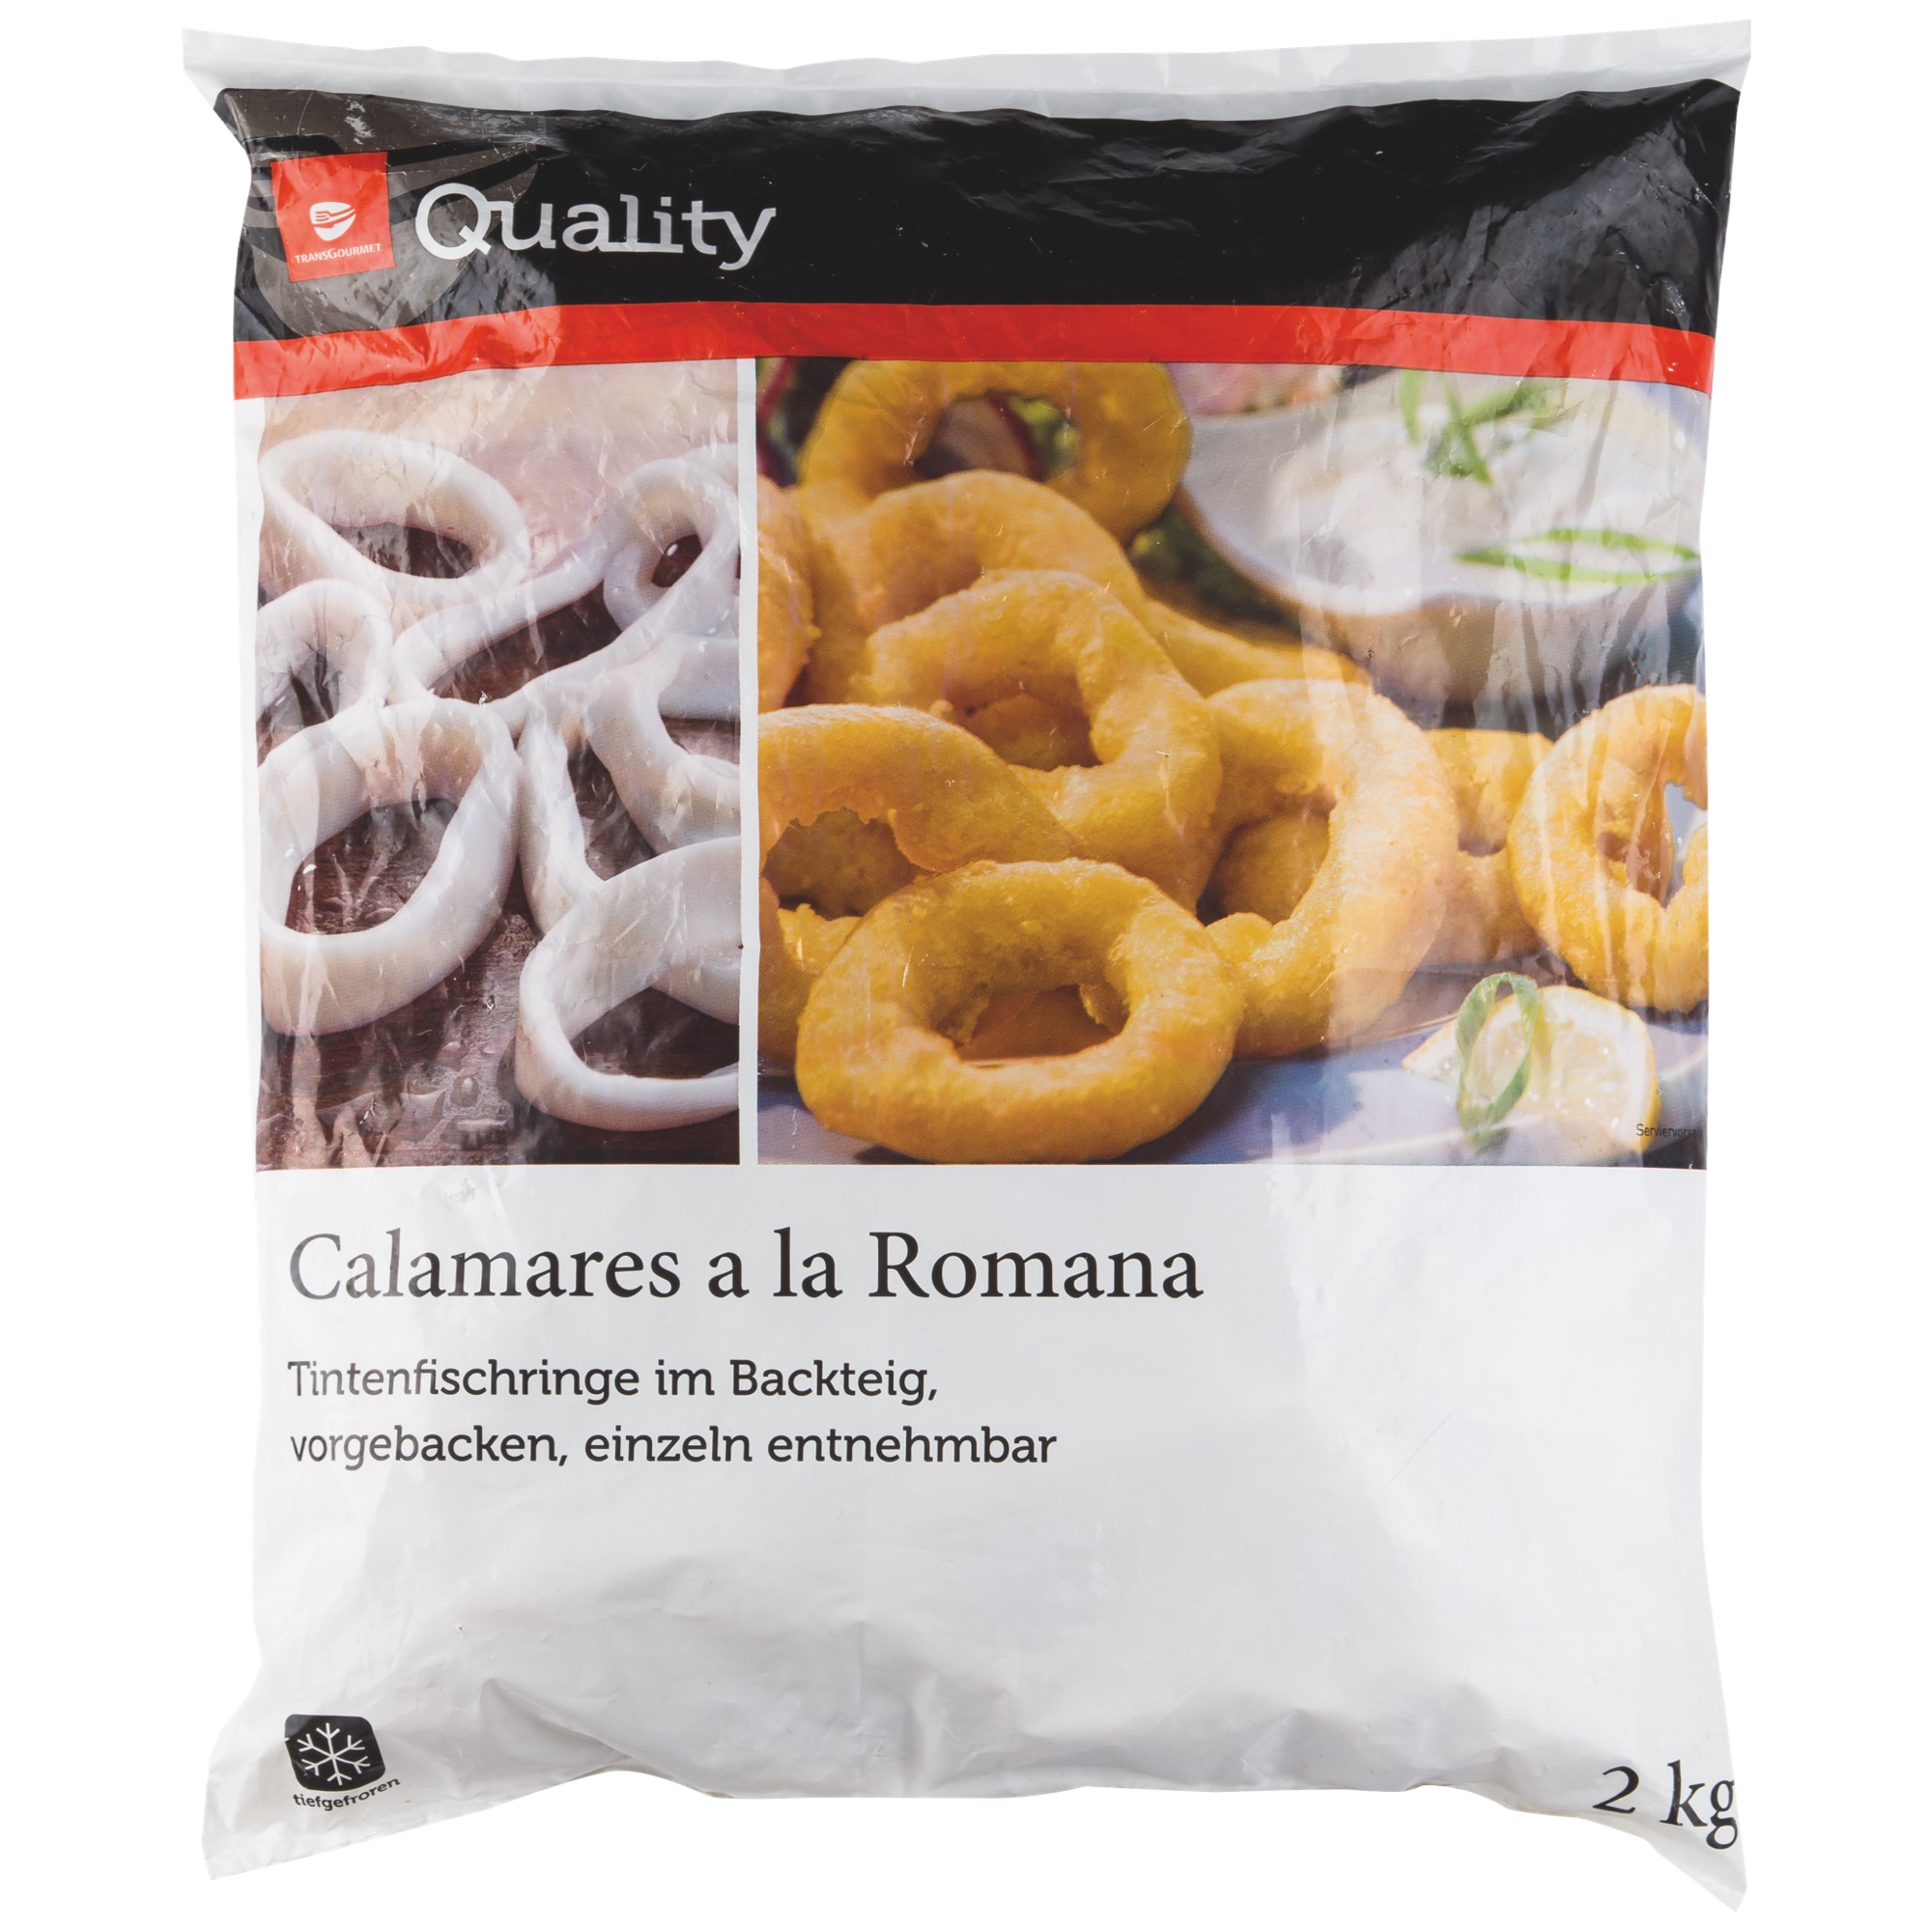 Quality Calamar a la Romana mr. 2kg